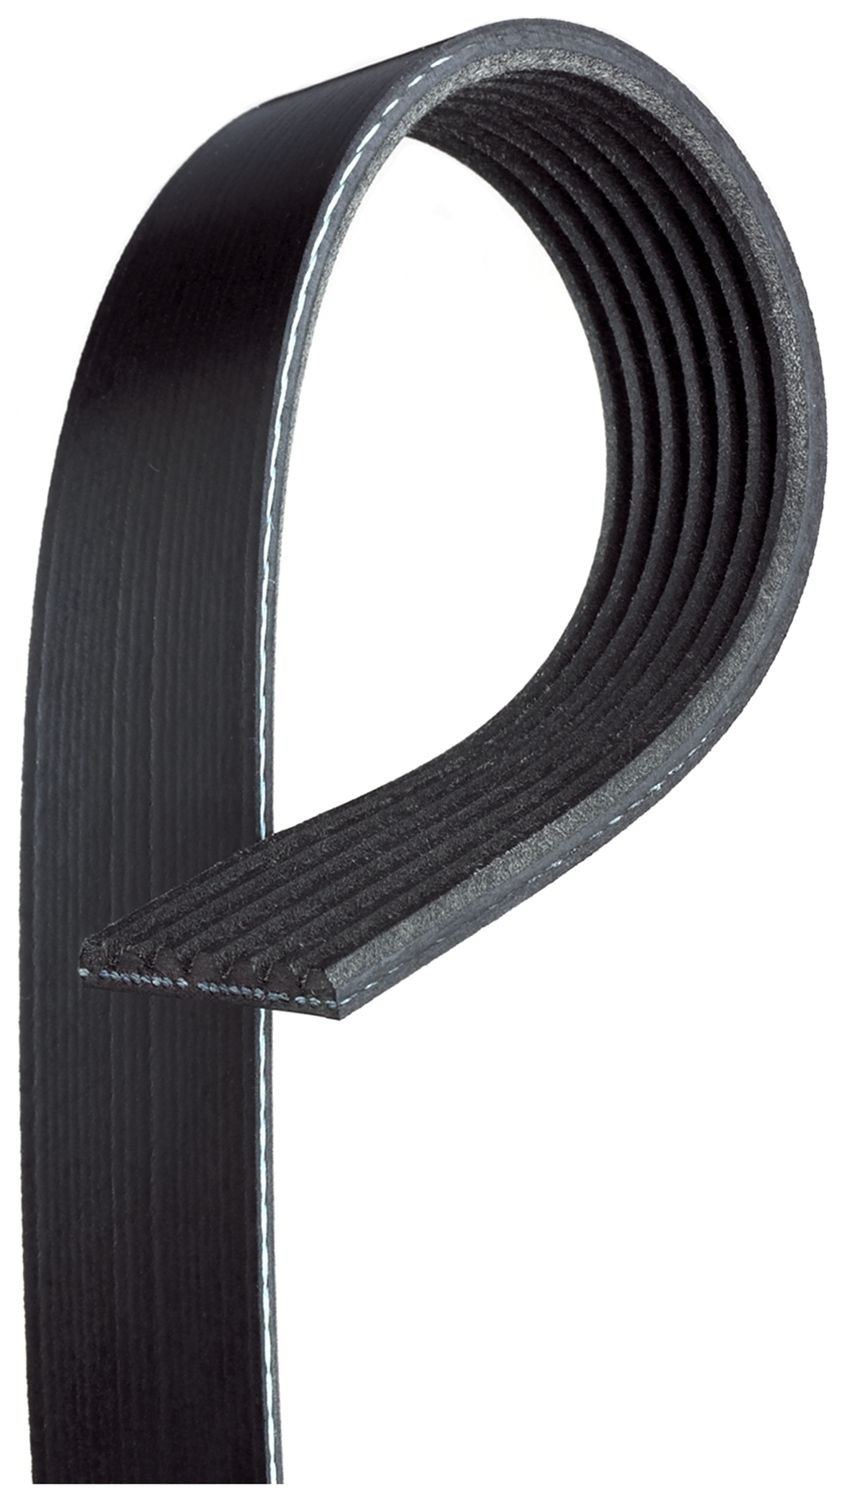 GATES 7PK1550 Serpentine belt 1550mm, 7, G-Force™ C12™ CVT Belt